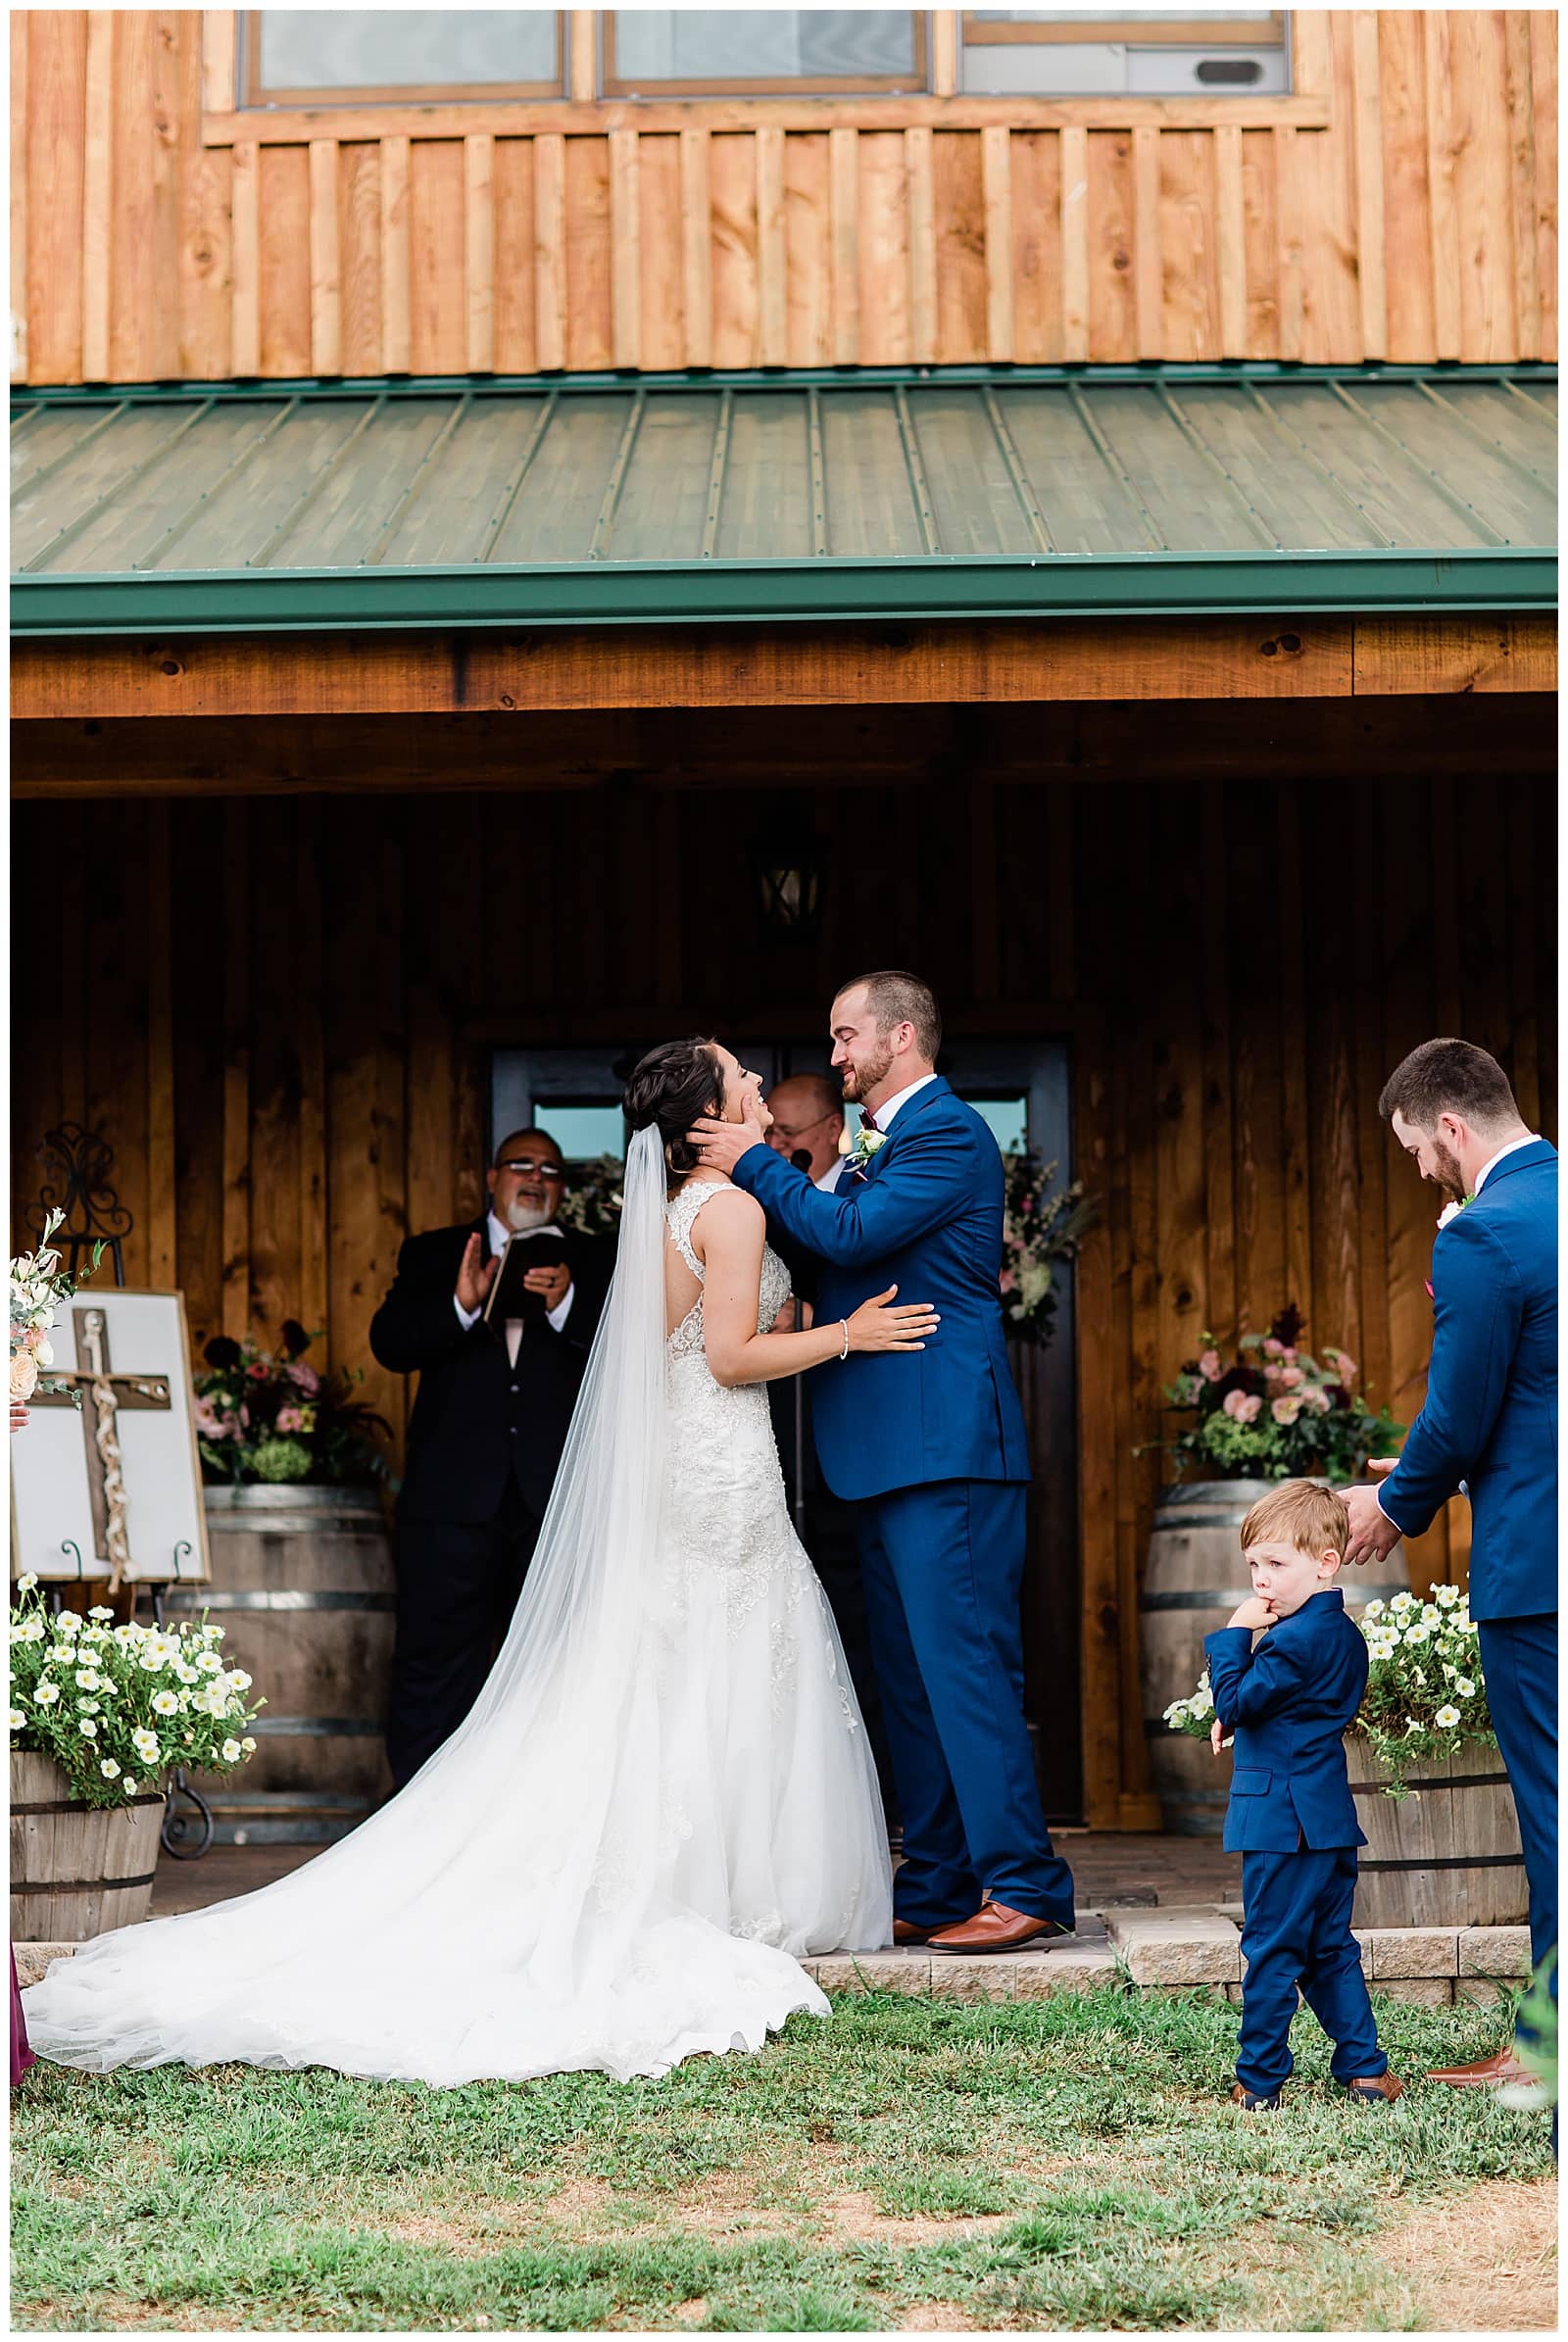 Danielle-Defayette-Photography-Middle-Fork-Barn-Wedding-VA-2020_0062.jpg